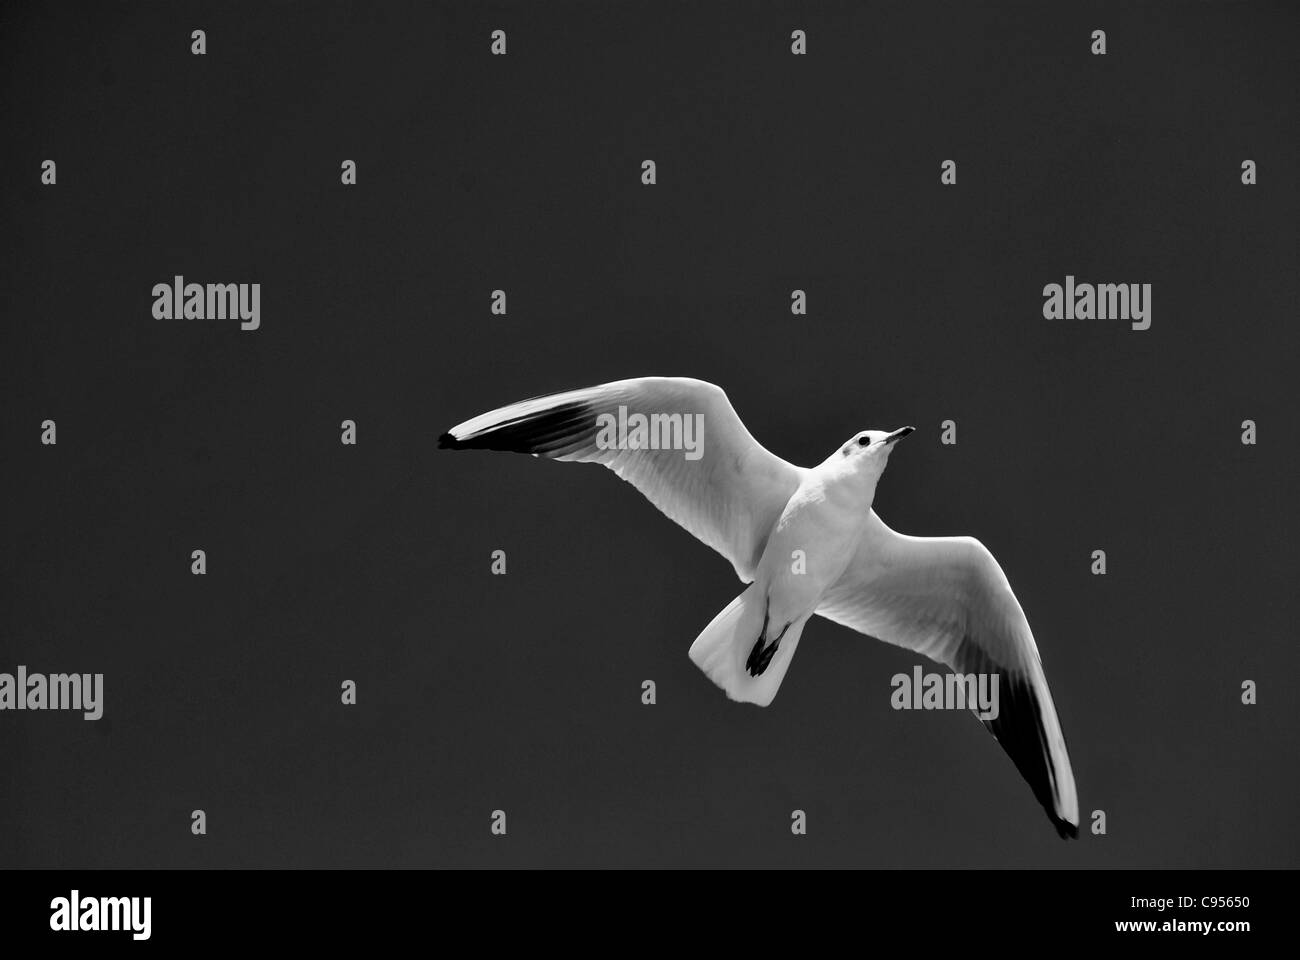 Flying seagull sul cielo blu Foto Stock